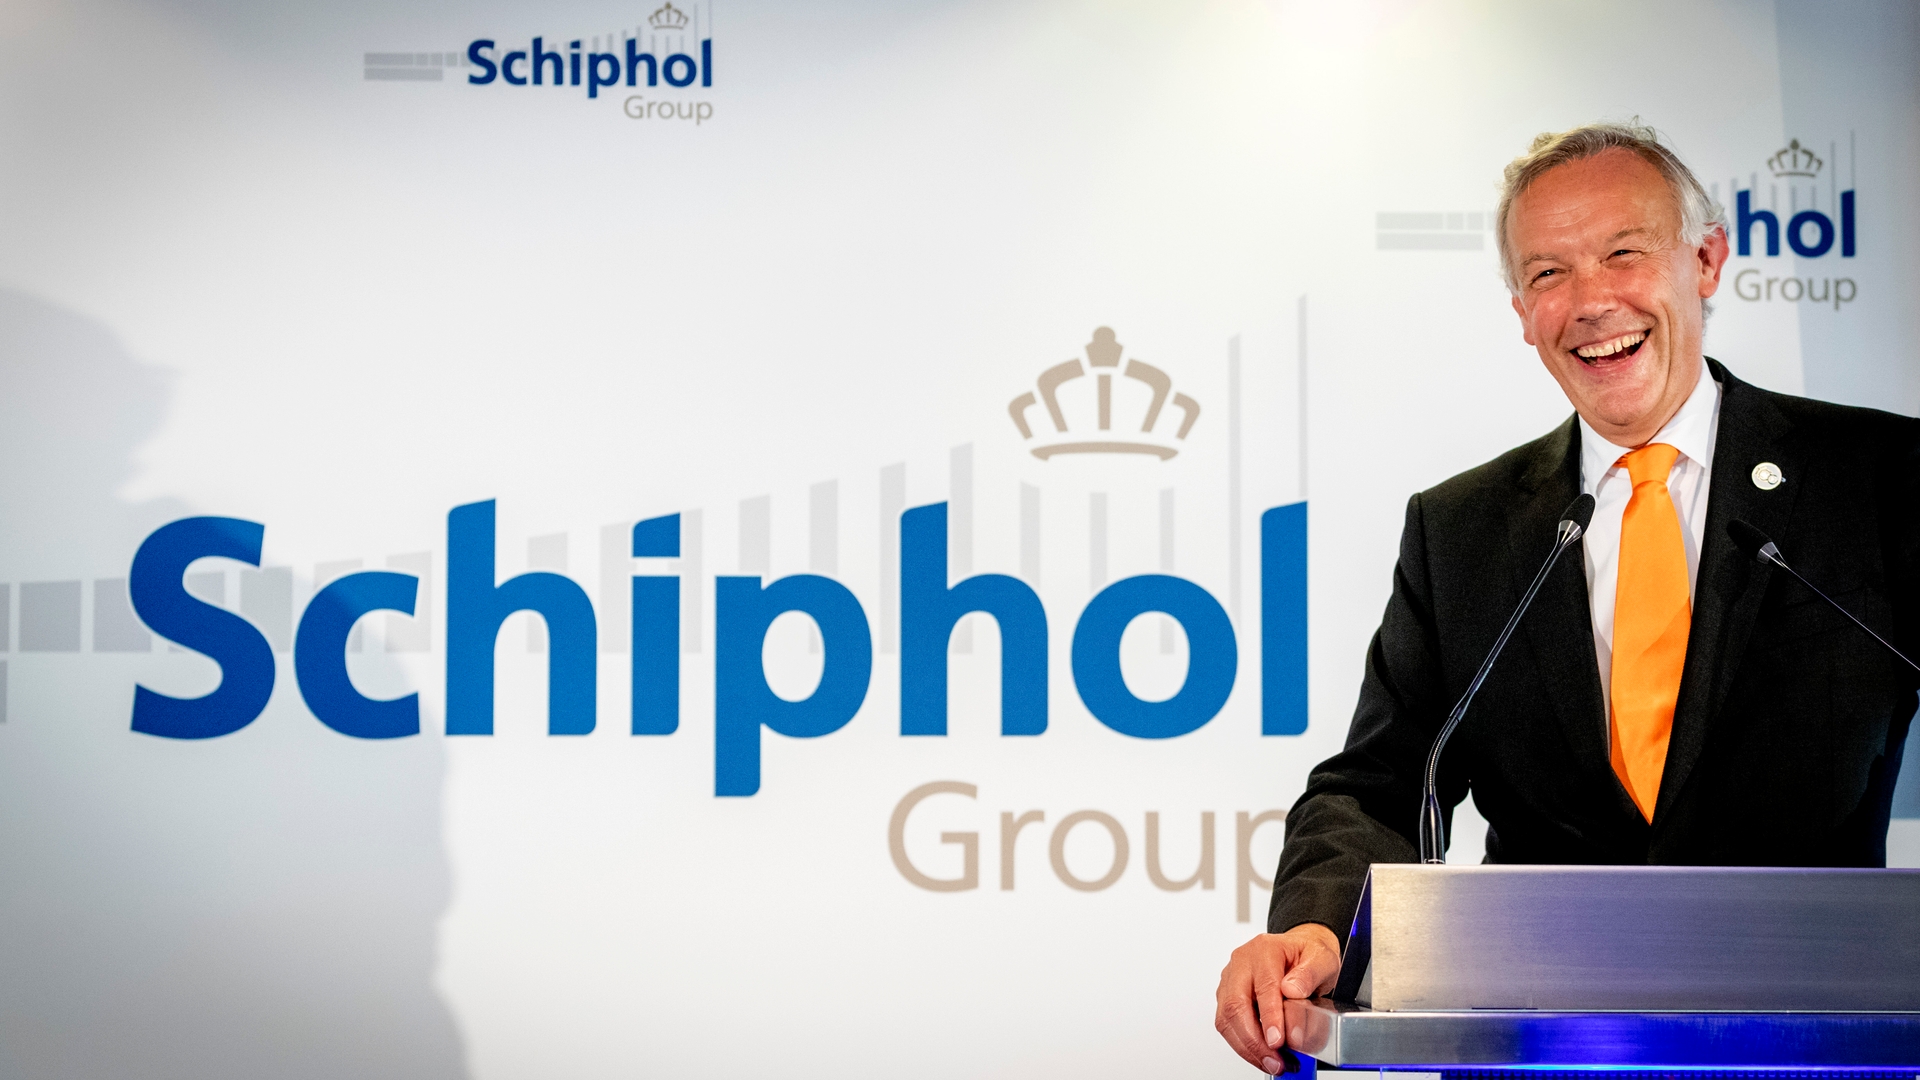 Schiphol Group onthult nieuw logo